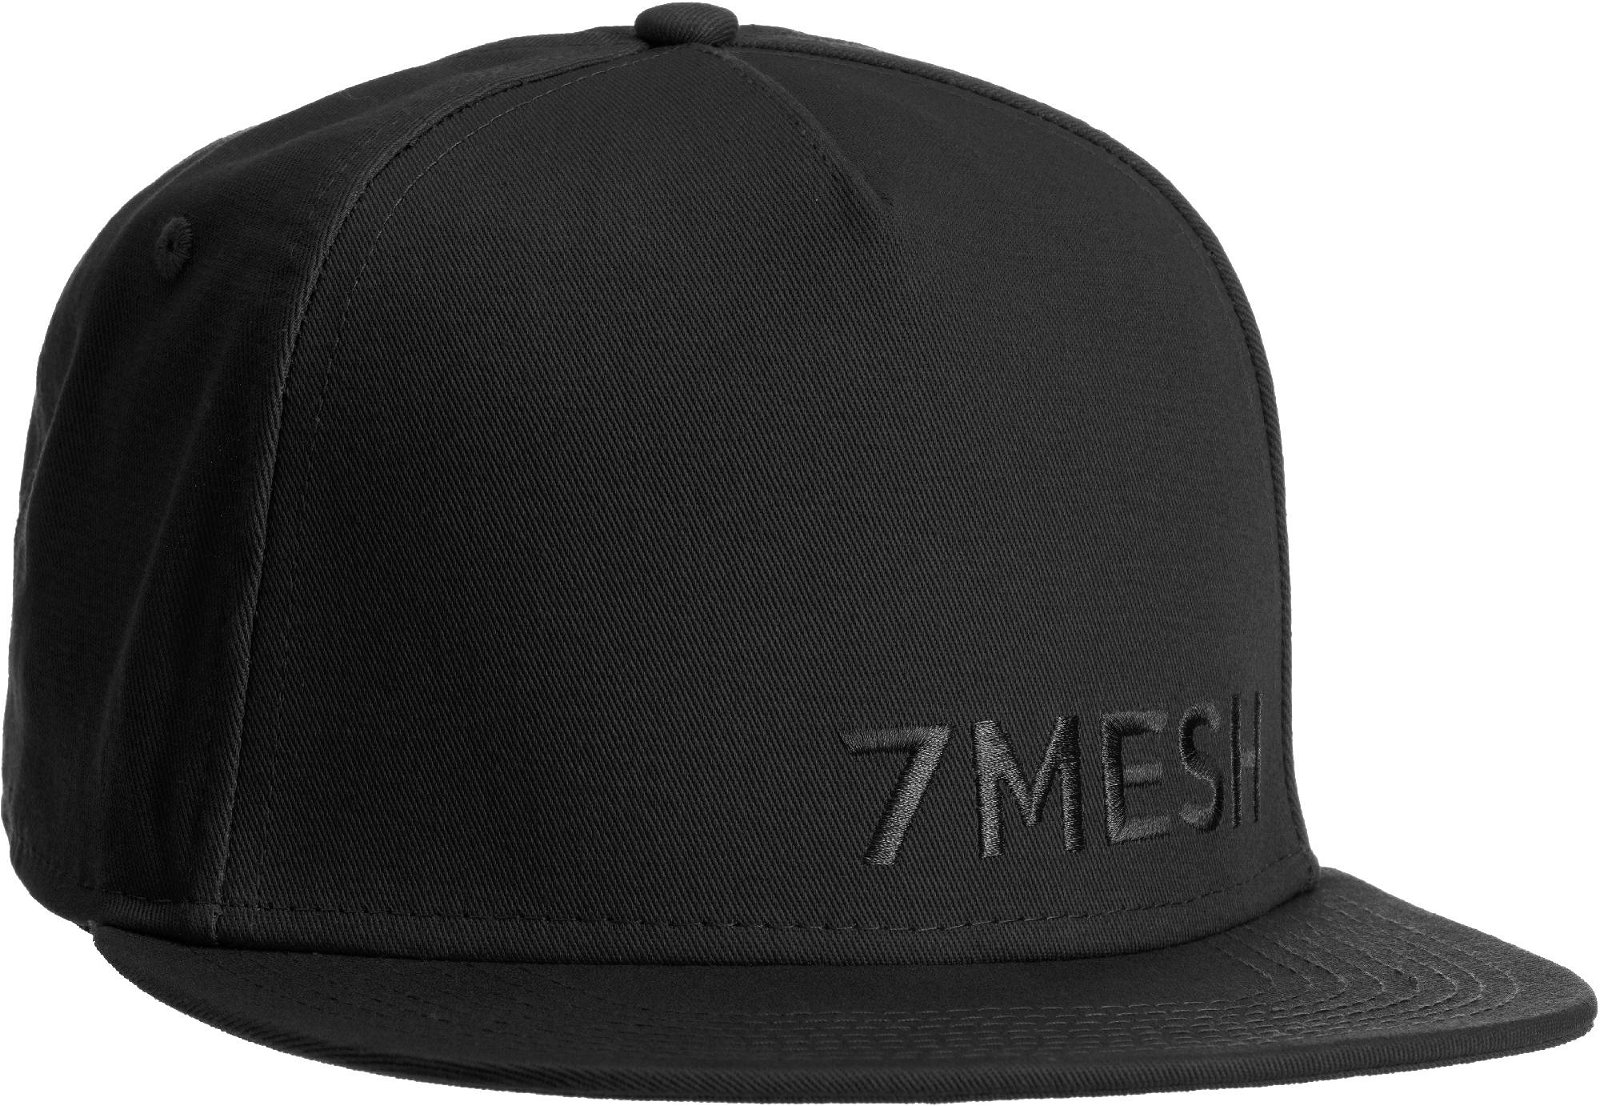 7Mesh Apres Hat